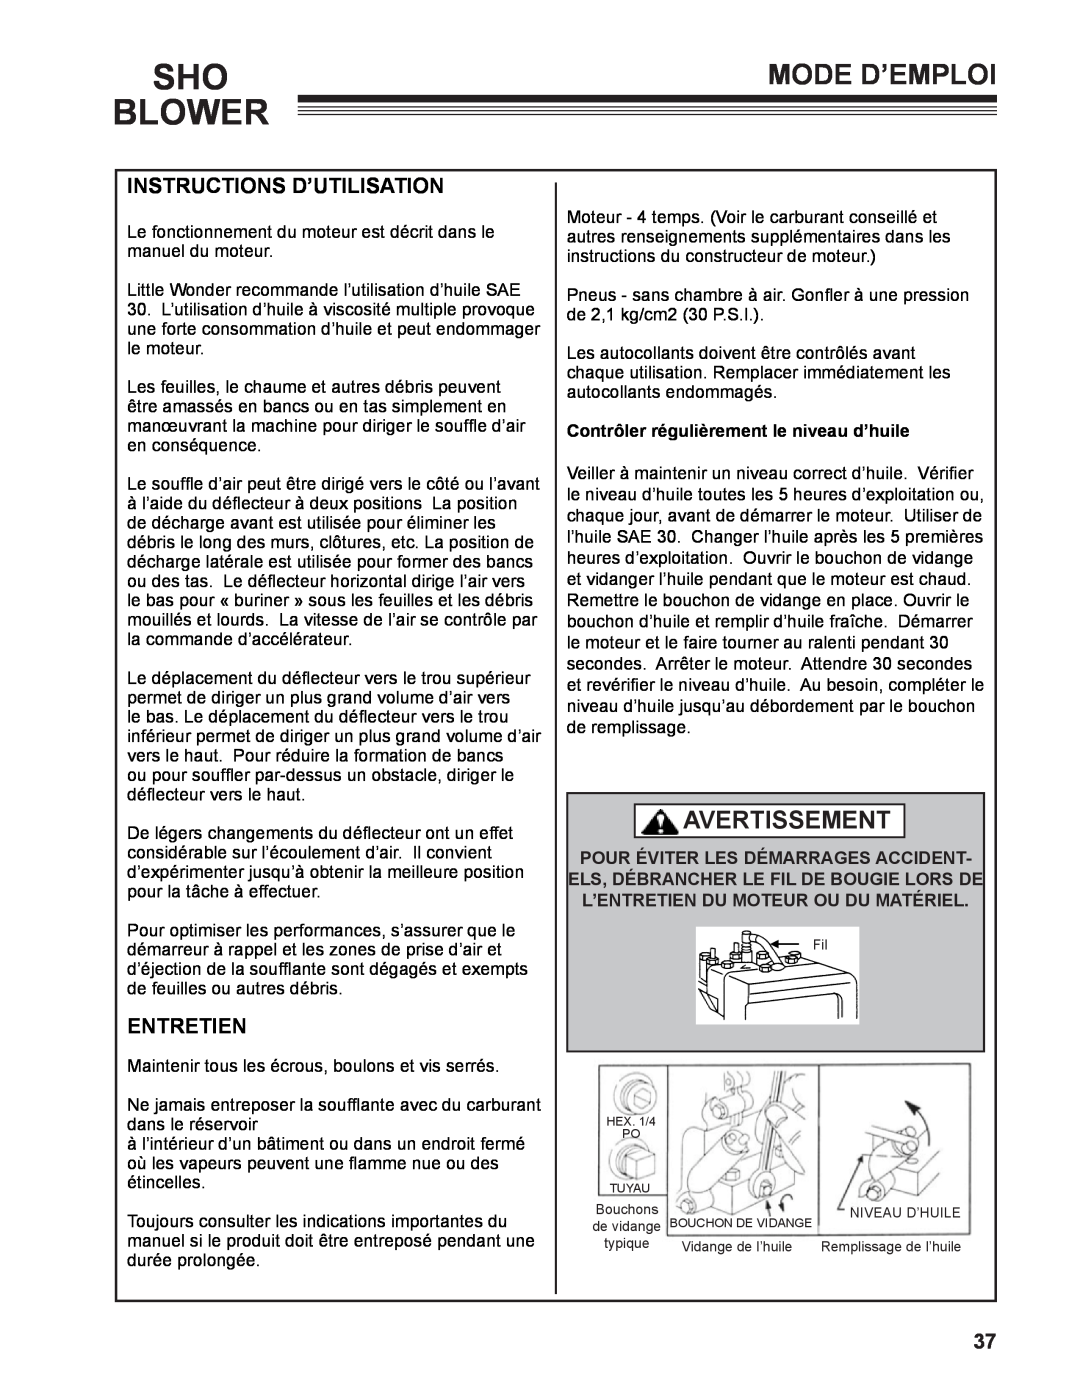 Little Wonder 9502-00-01 technical manual Mode D’Emploi, Instructions d’utilisation, Entretien, Sho Blower, Avertissement 